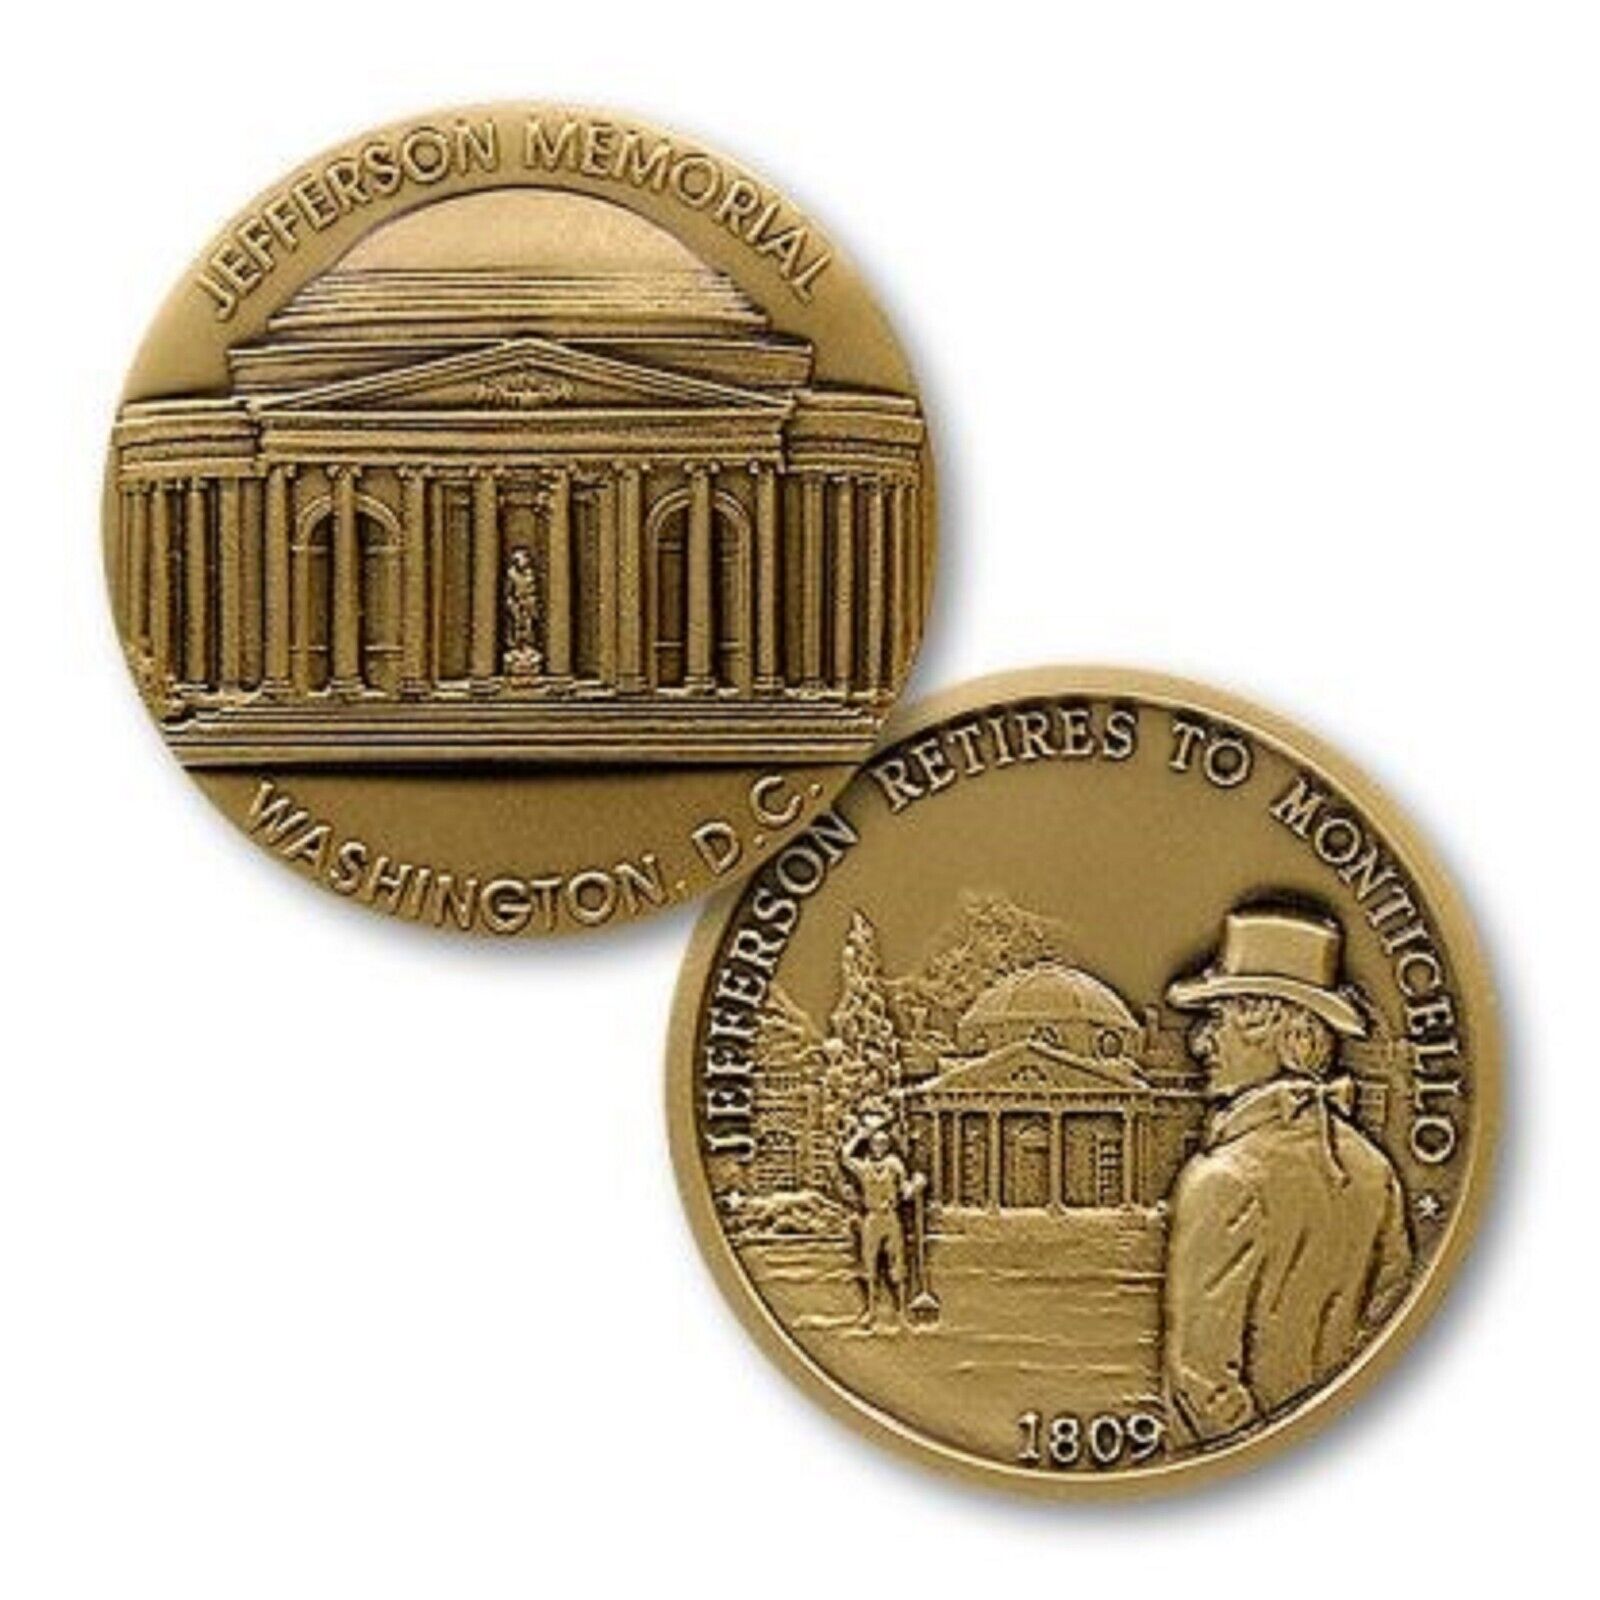 JEFFERSON MEMORIAL NATIONAL MONUMENT WASHINGTON D.C. MONTICELLO  CHALLENGE COIN